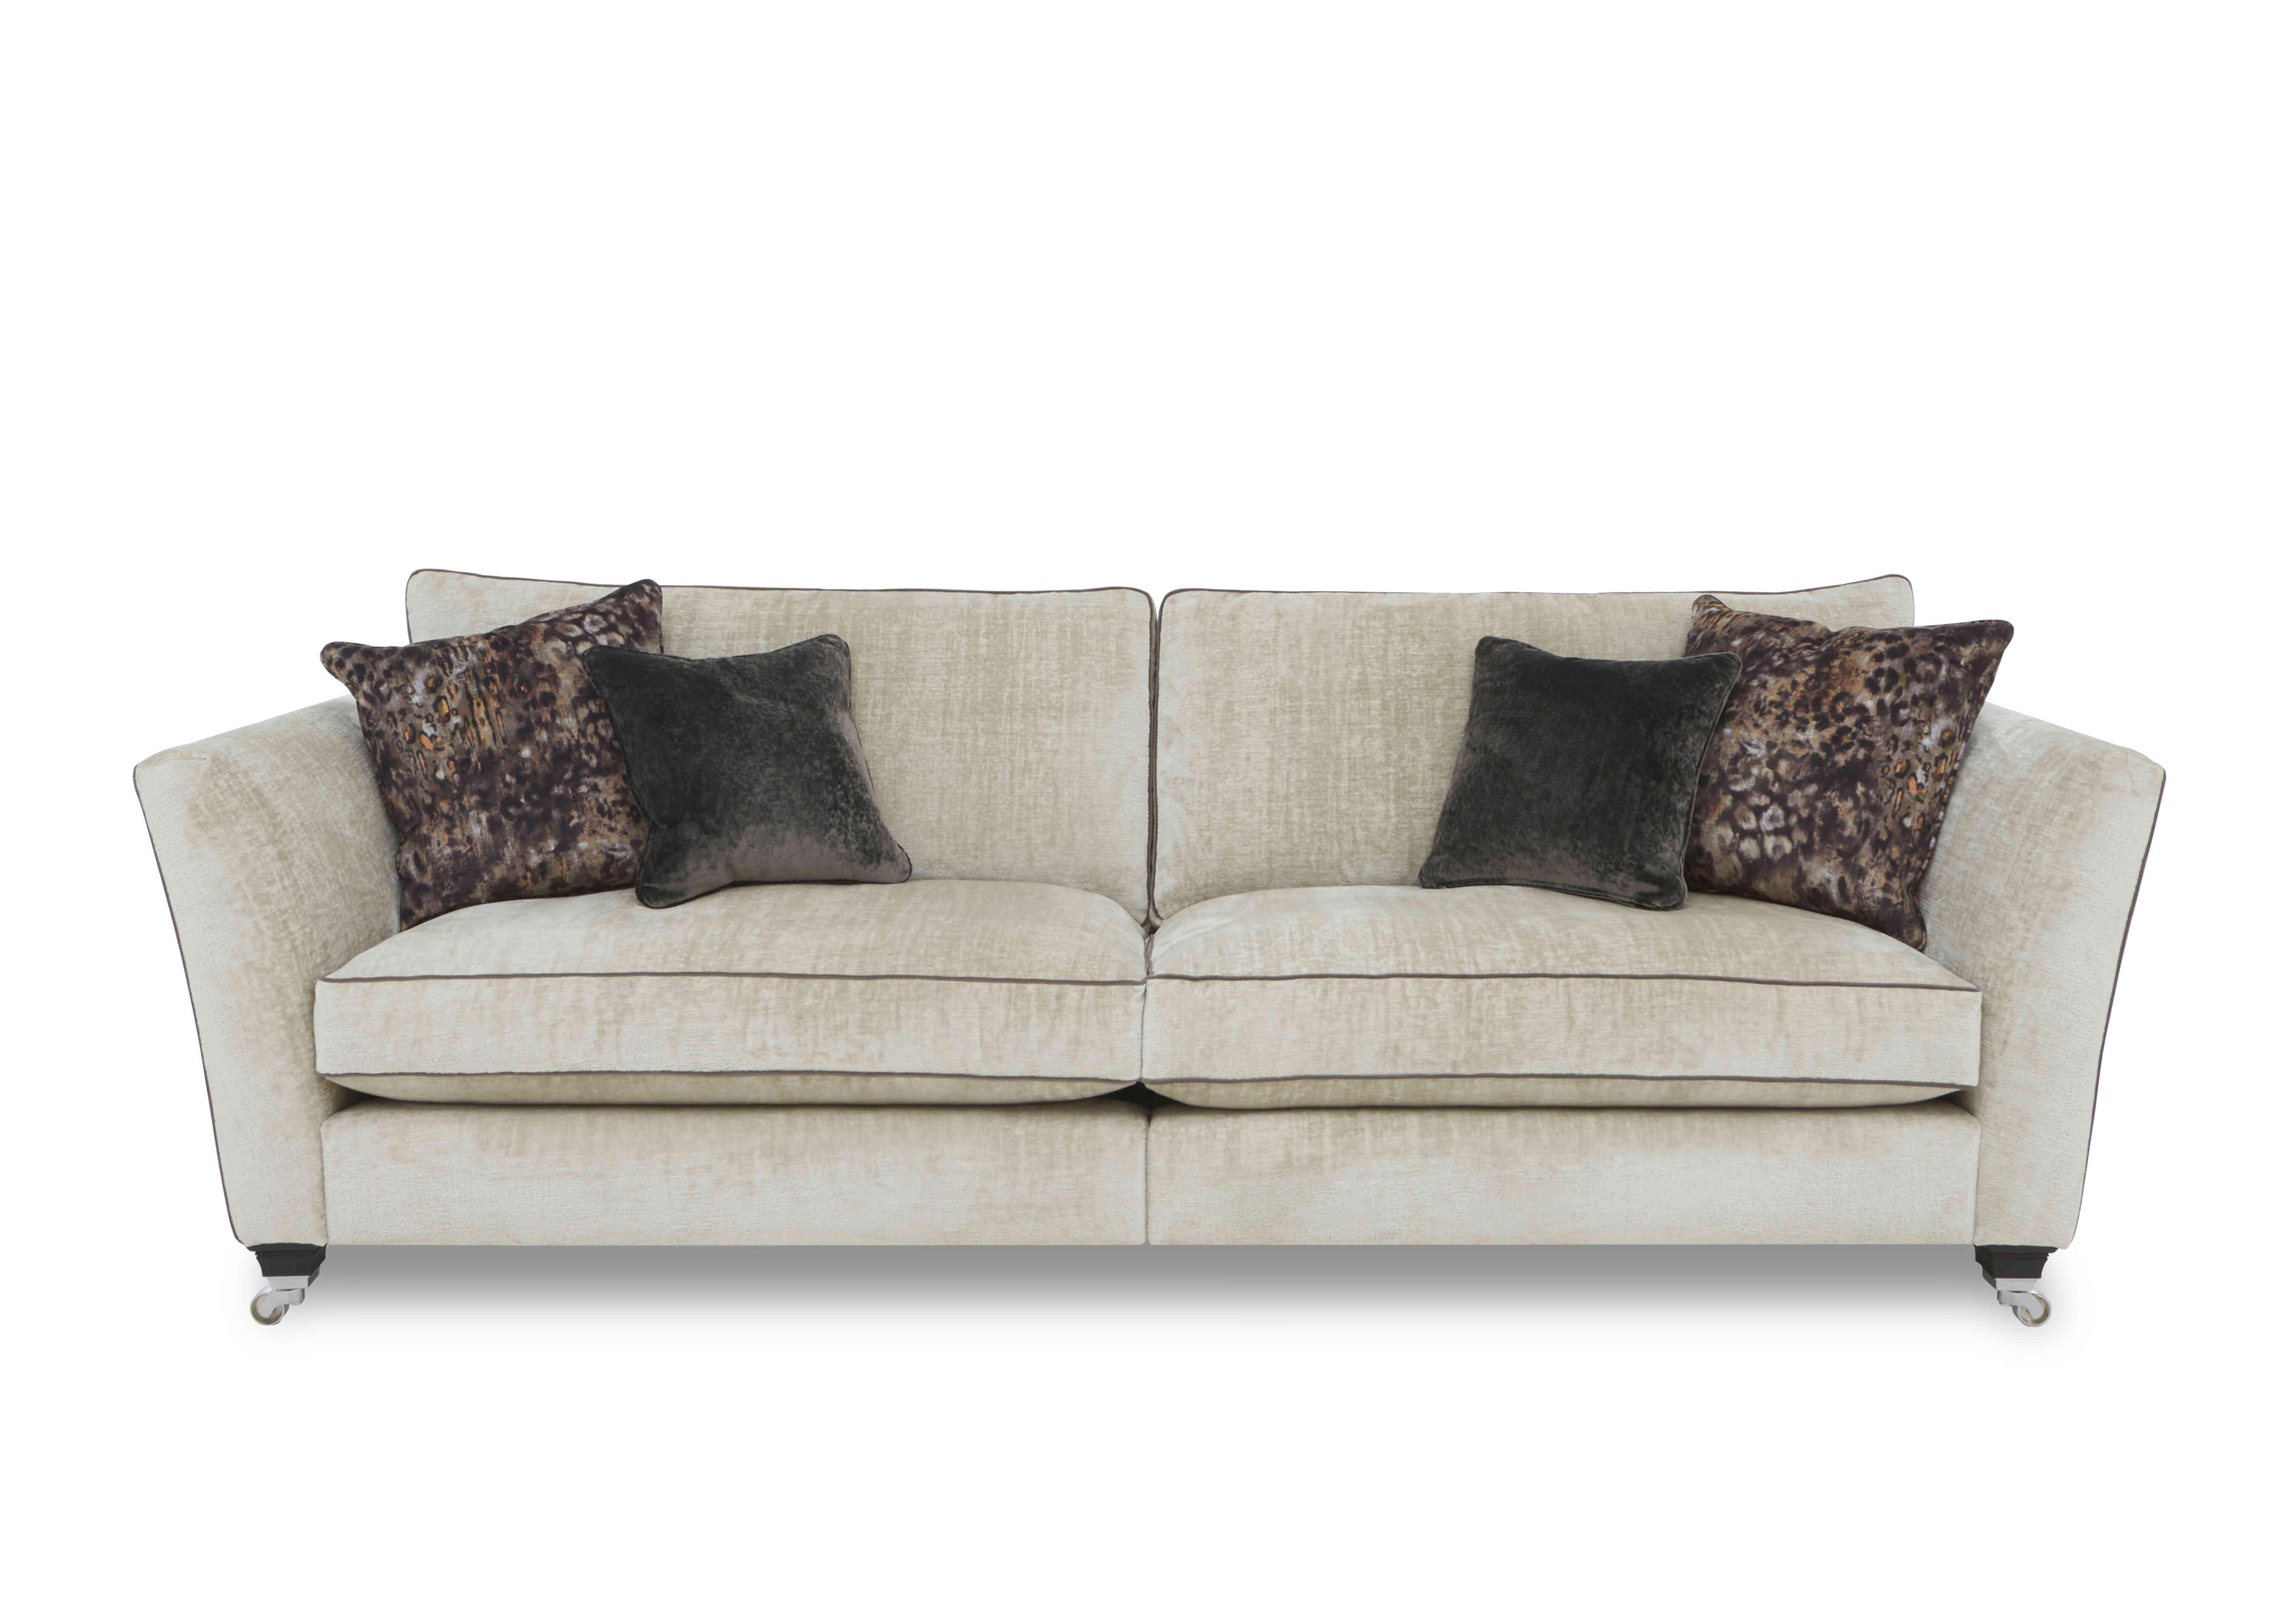 Modern Classics Victoria Park 4 Seater Split Frame Sofa in Remini Pebble Cp Mc on Furniture Village